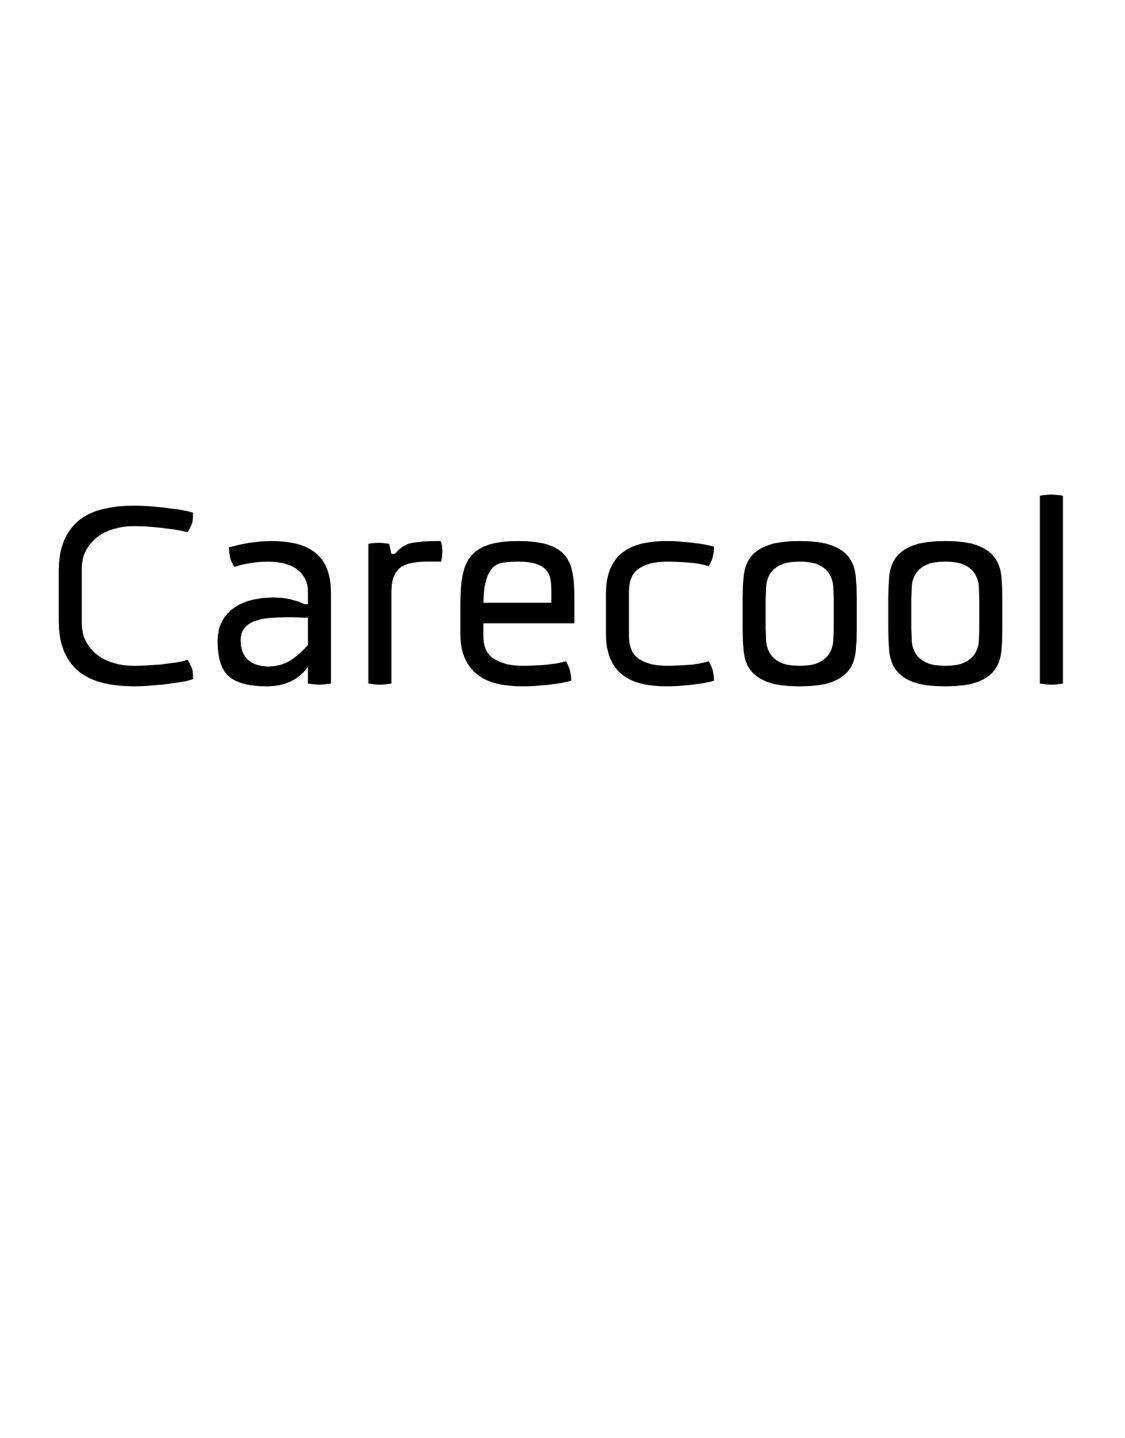 carecool